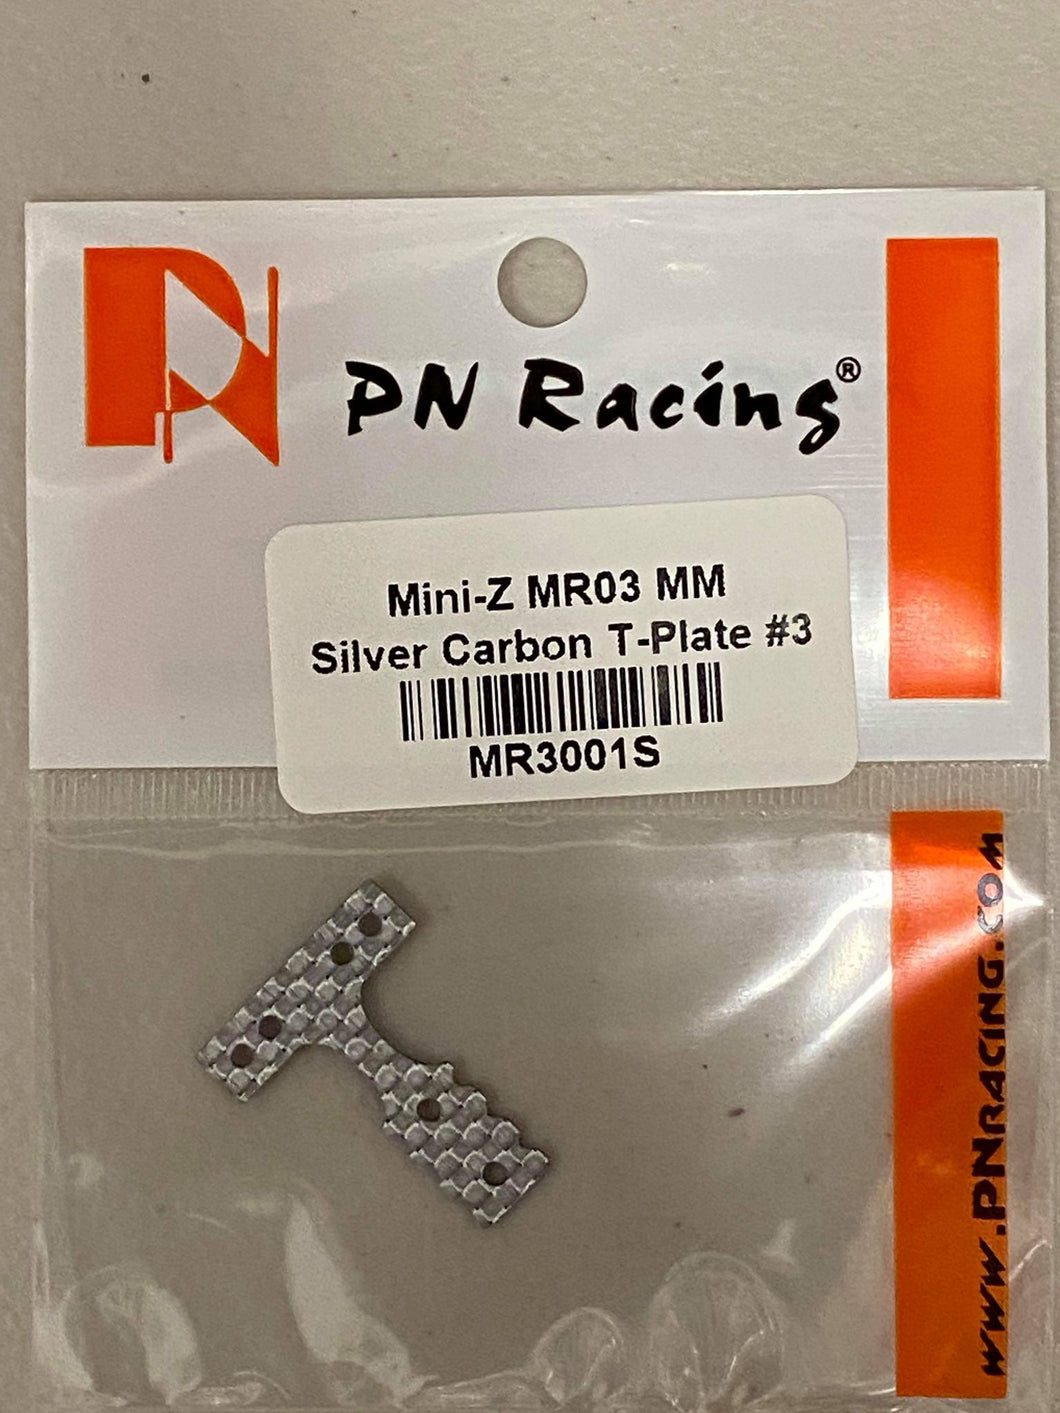 MR3001S PN Racing Mini-Z MR03 MM Silver Carbon T-Plate #3